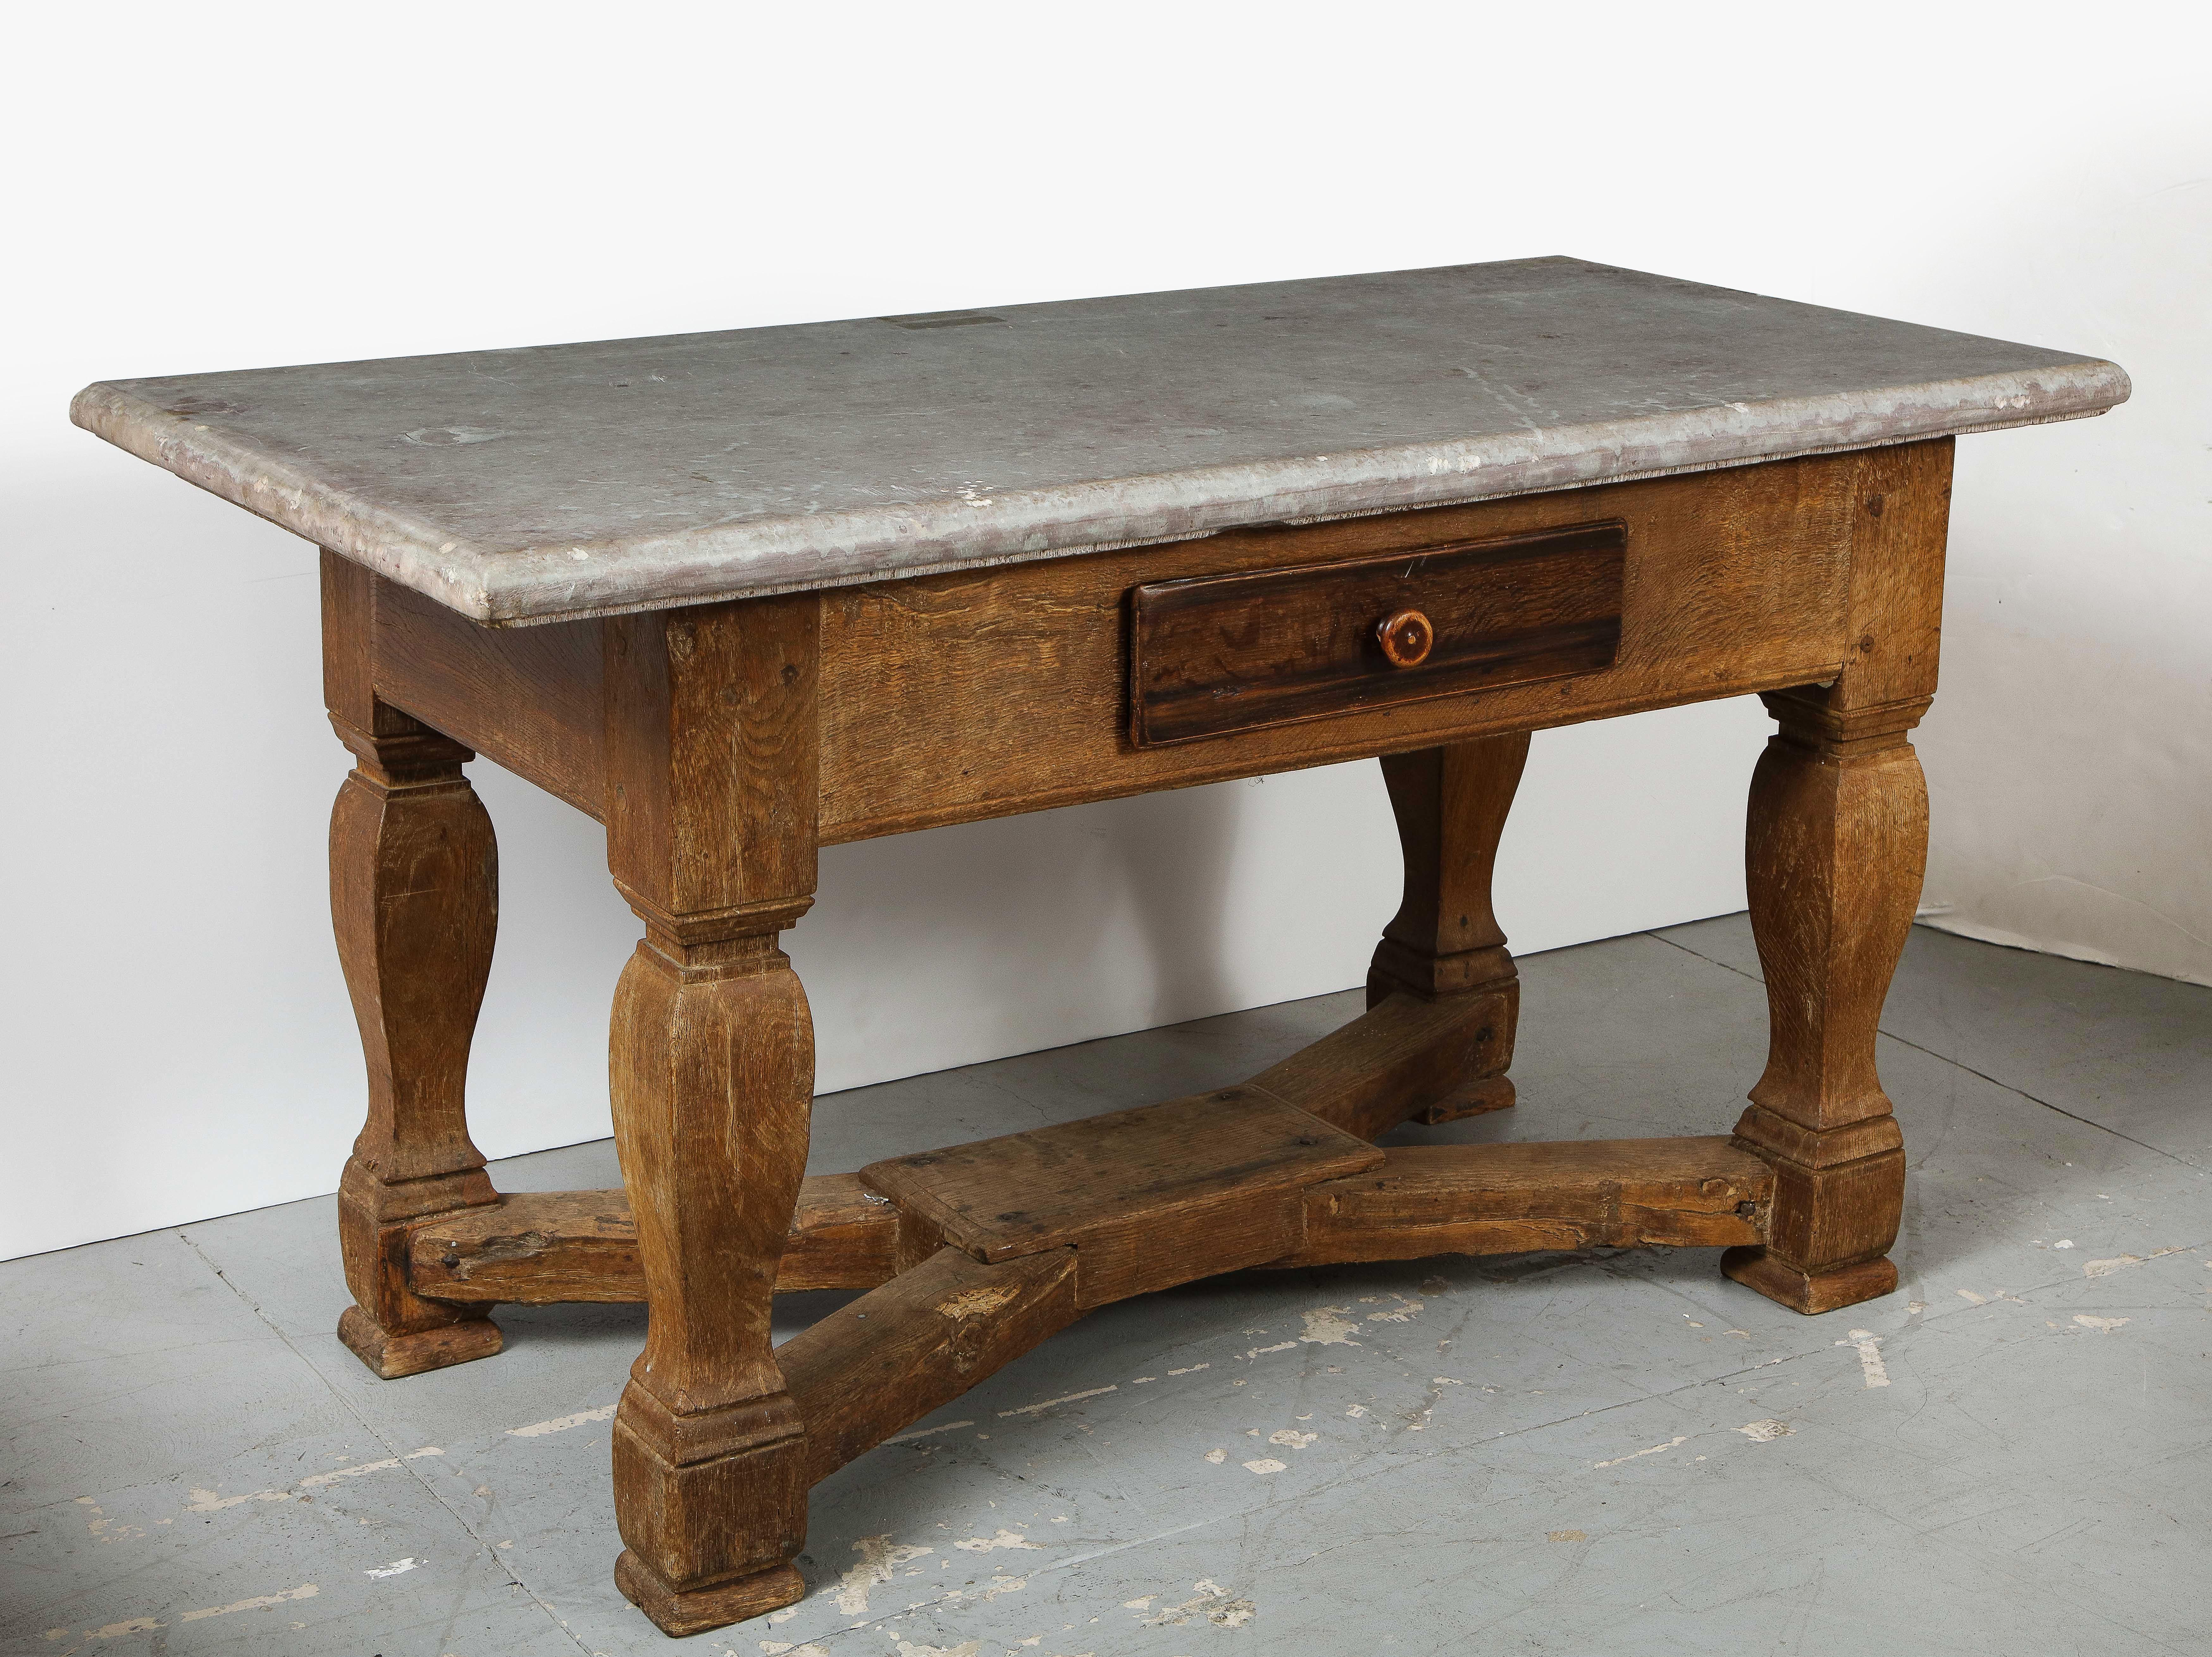  18th C. Swedish Stone Top Table w/ Drawer & Oak Stretcher Base, Sweden, c. 1750 1